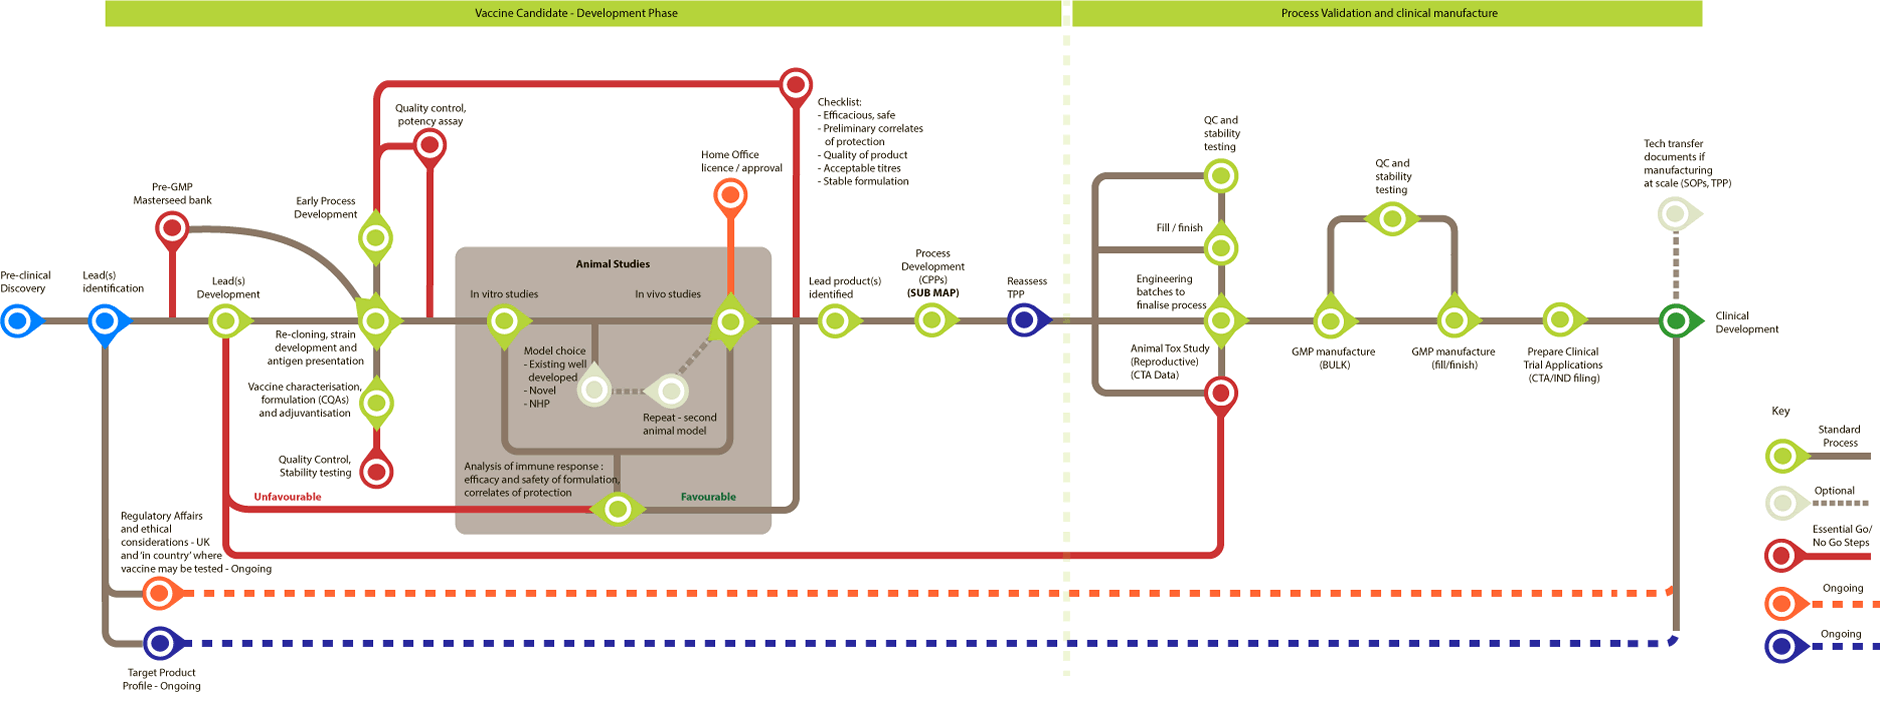 pre-clinical development routemap